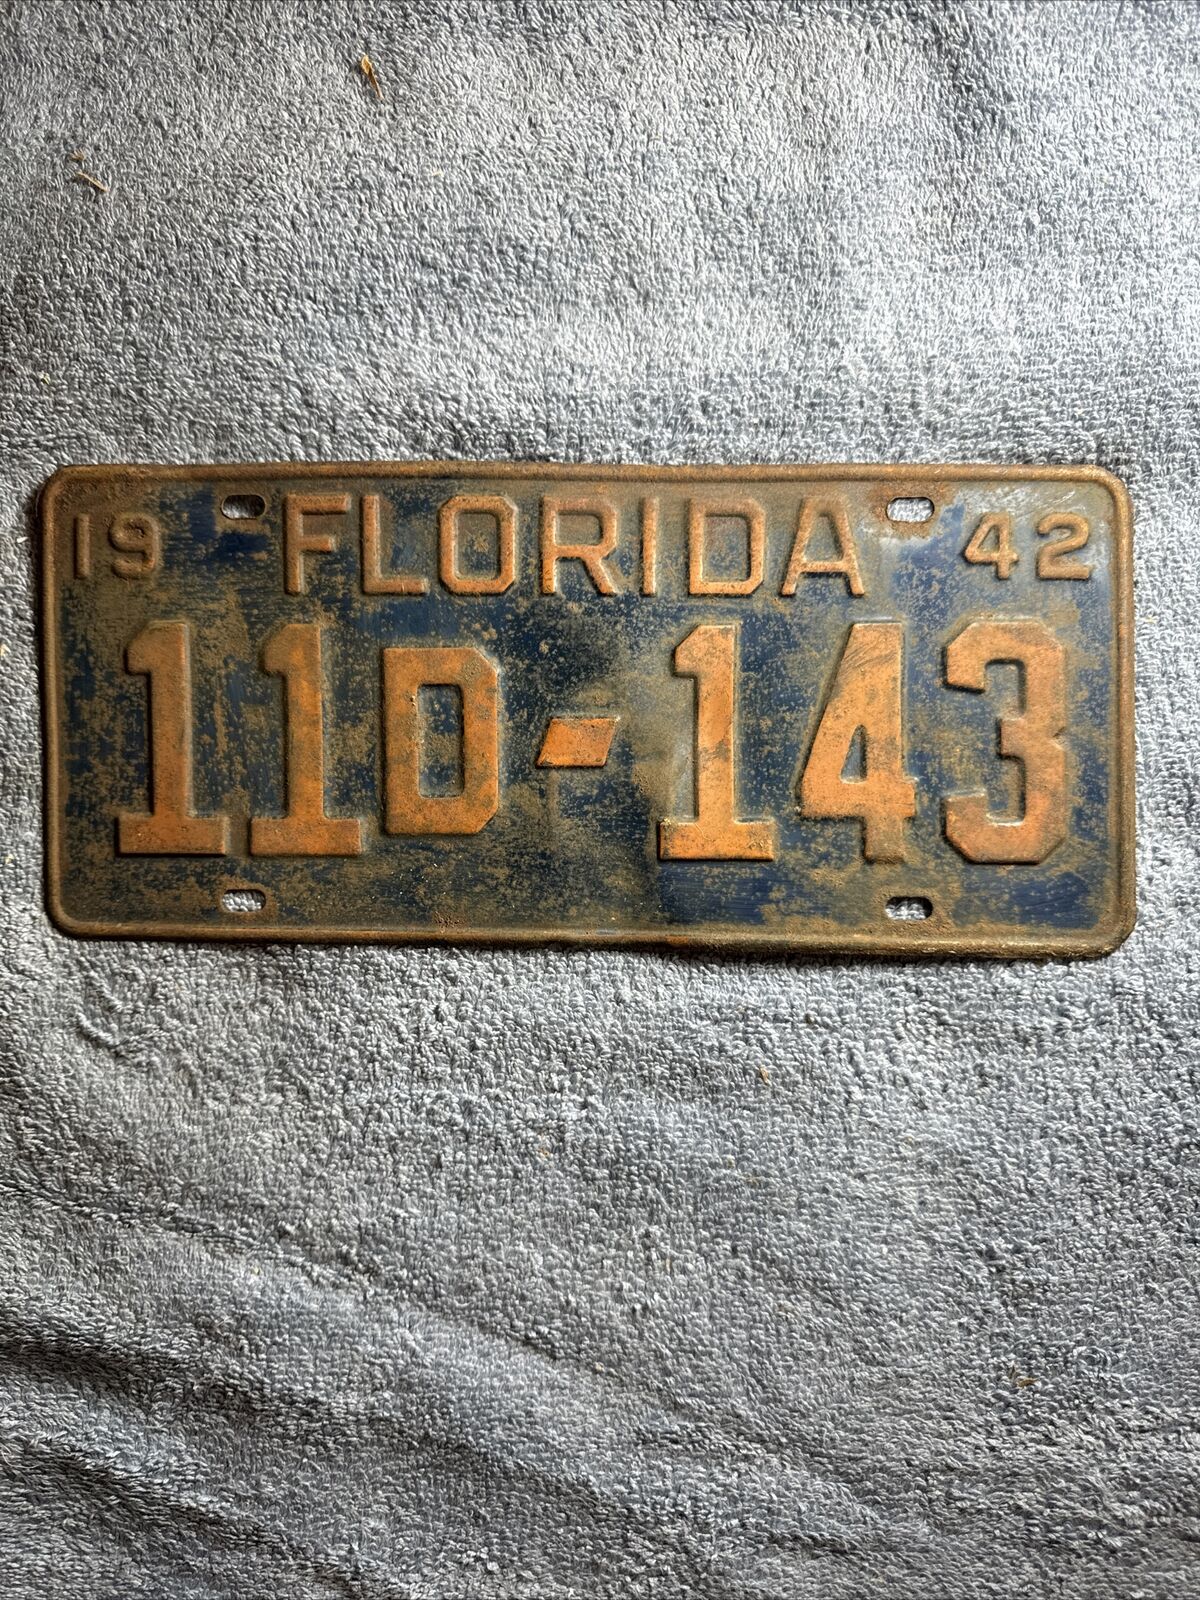 1942 Florida License Plate 11D-143